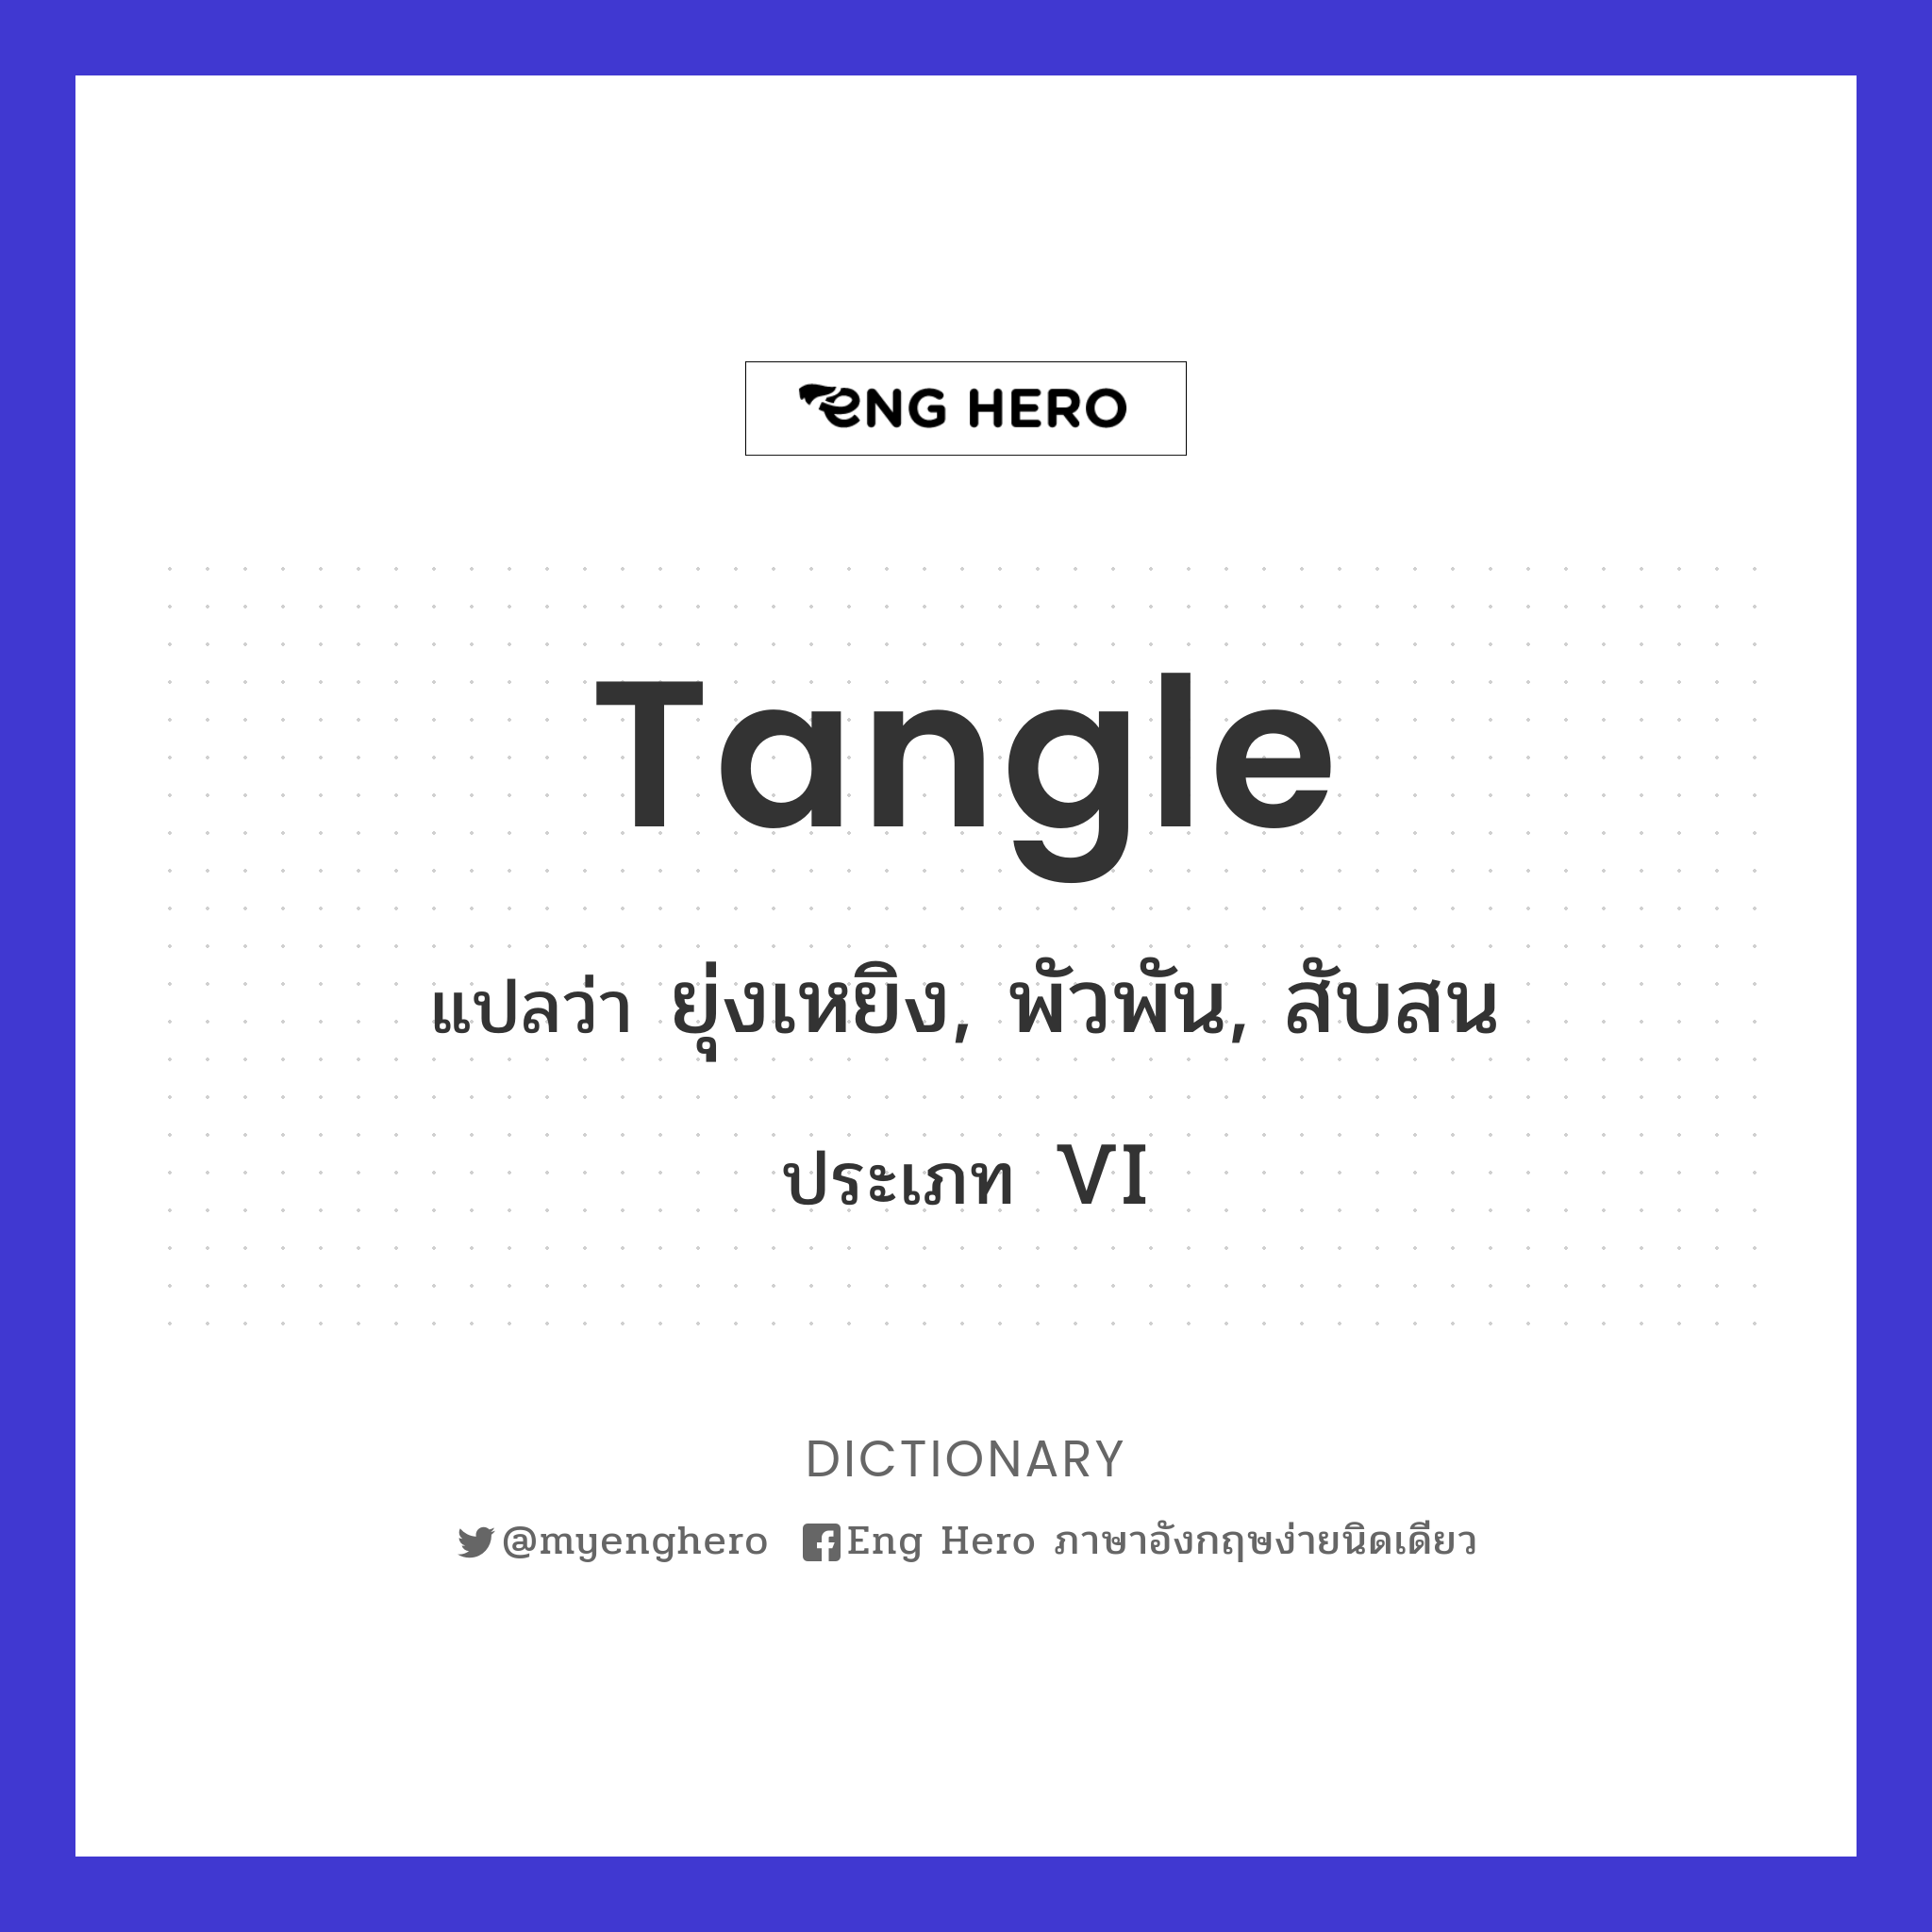 tangle